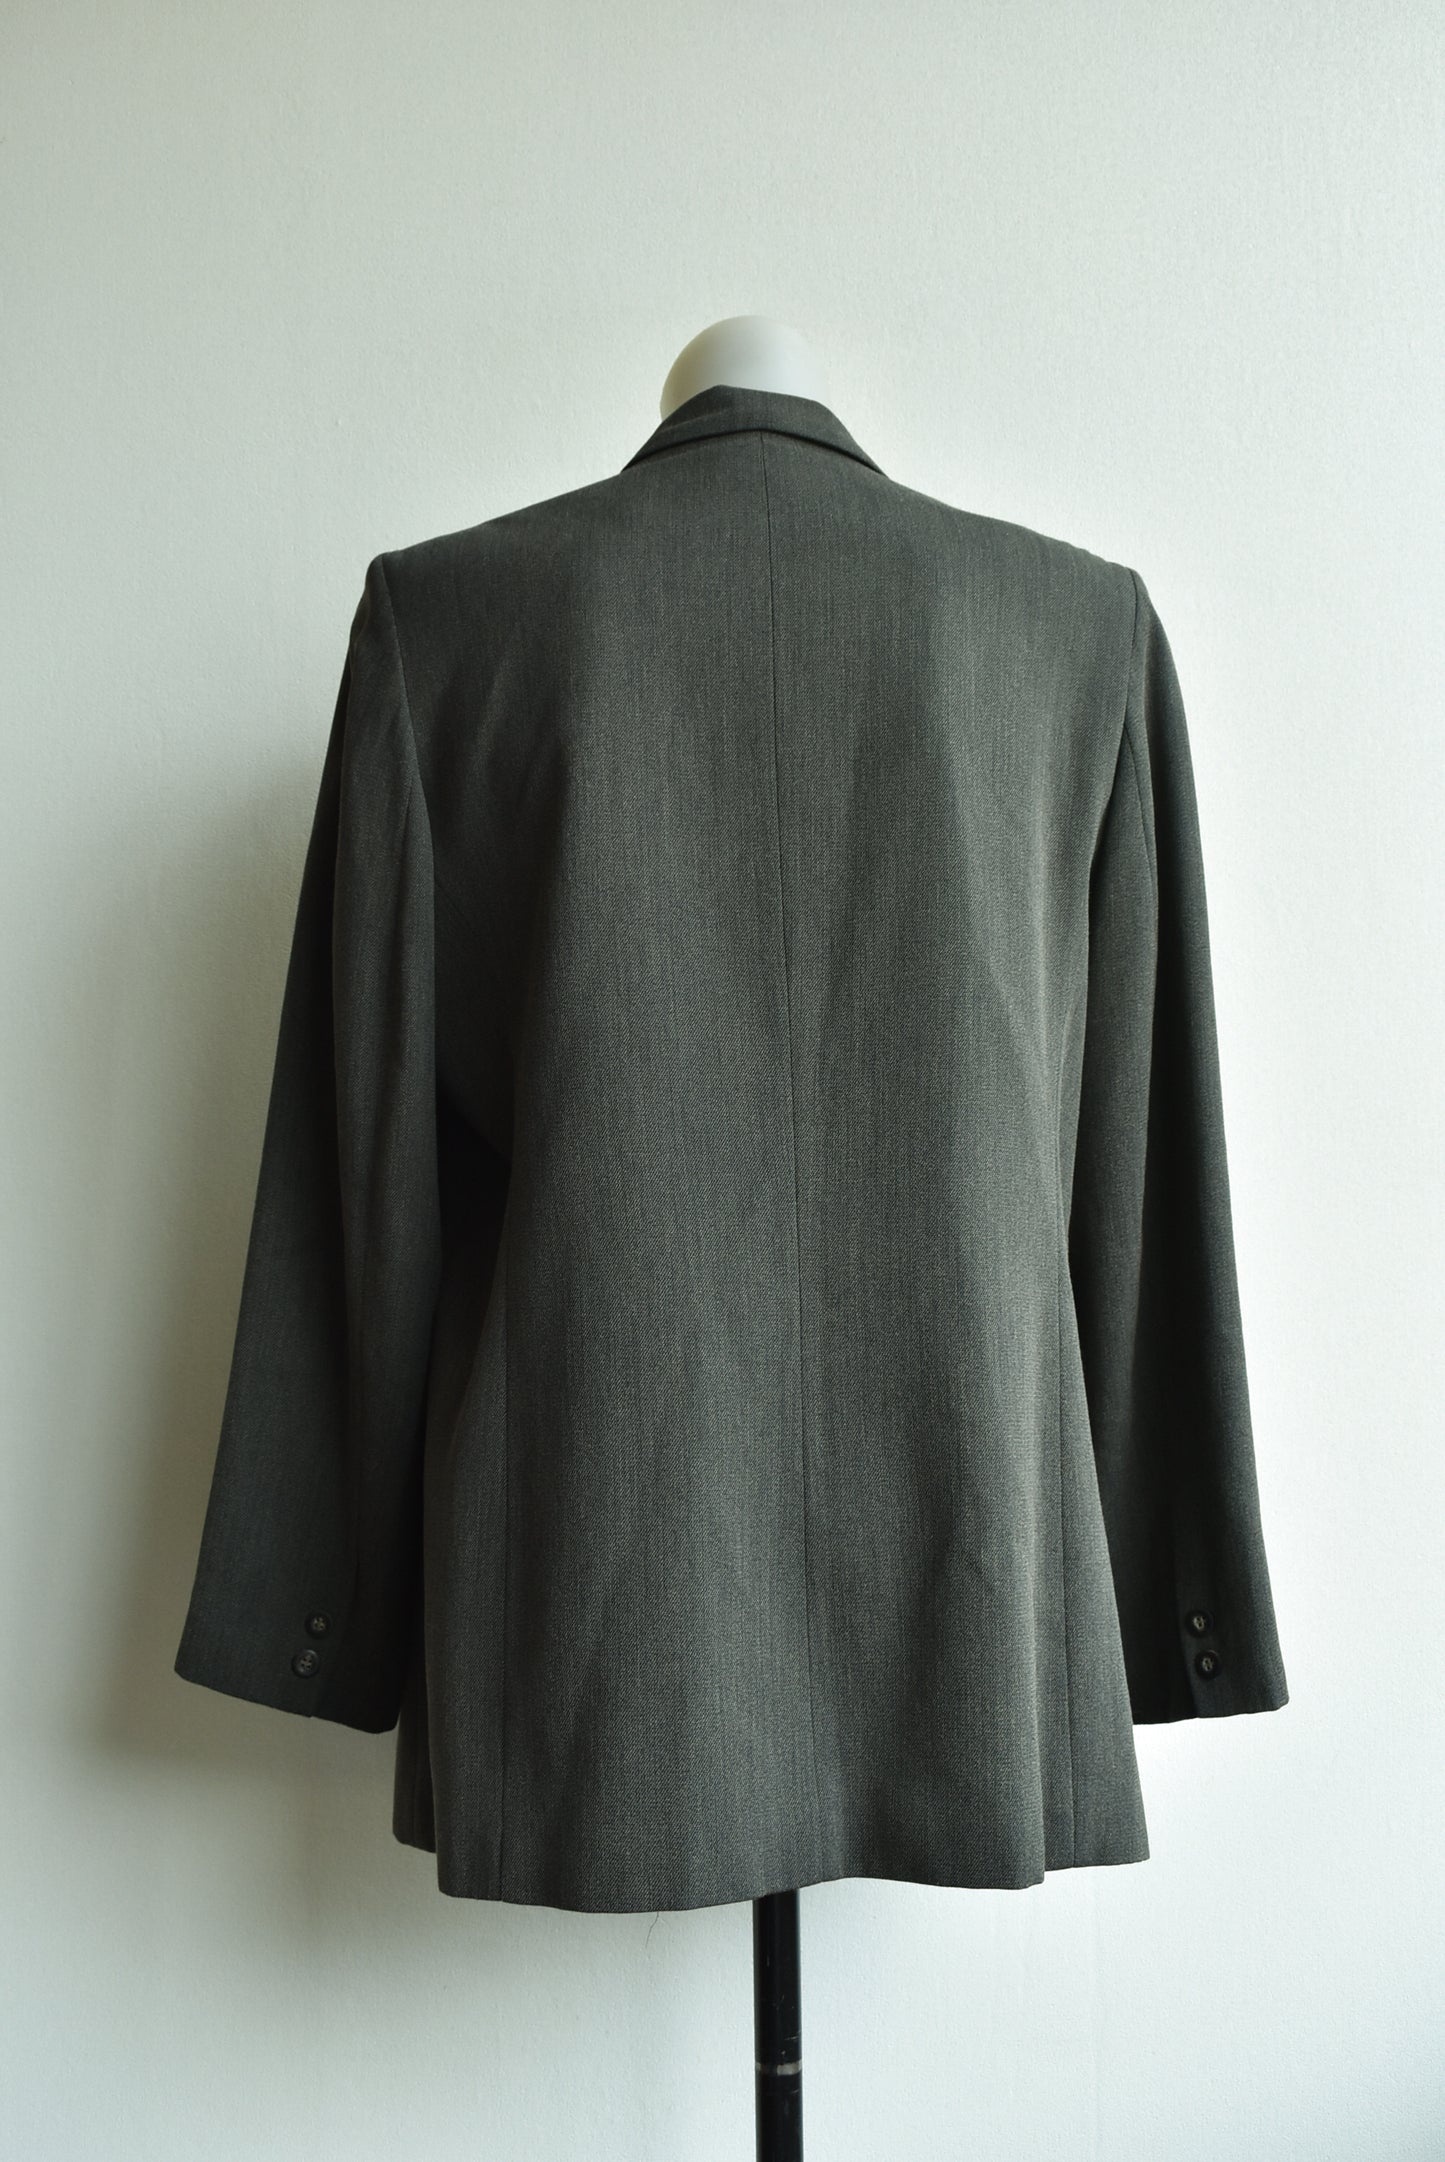 Charade dark blazer, size 14